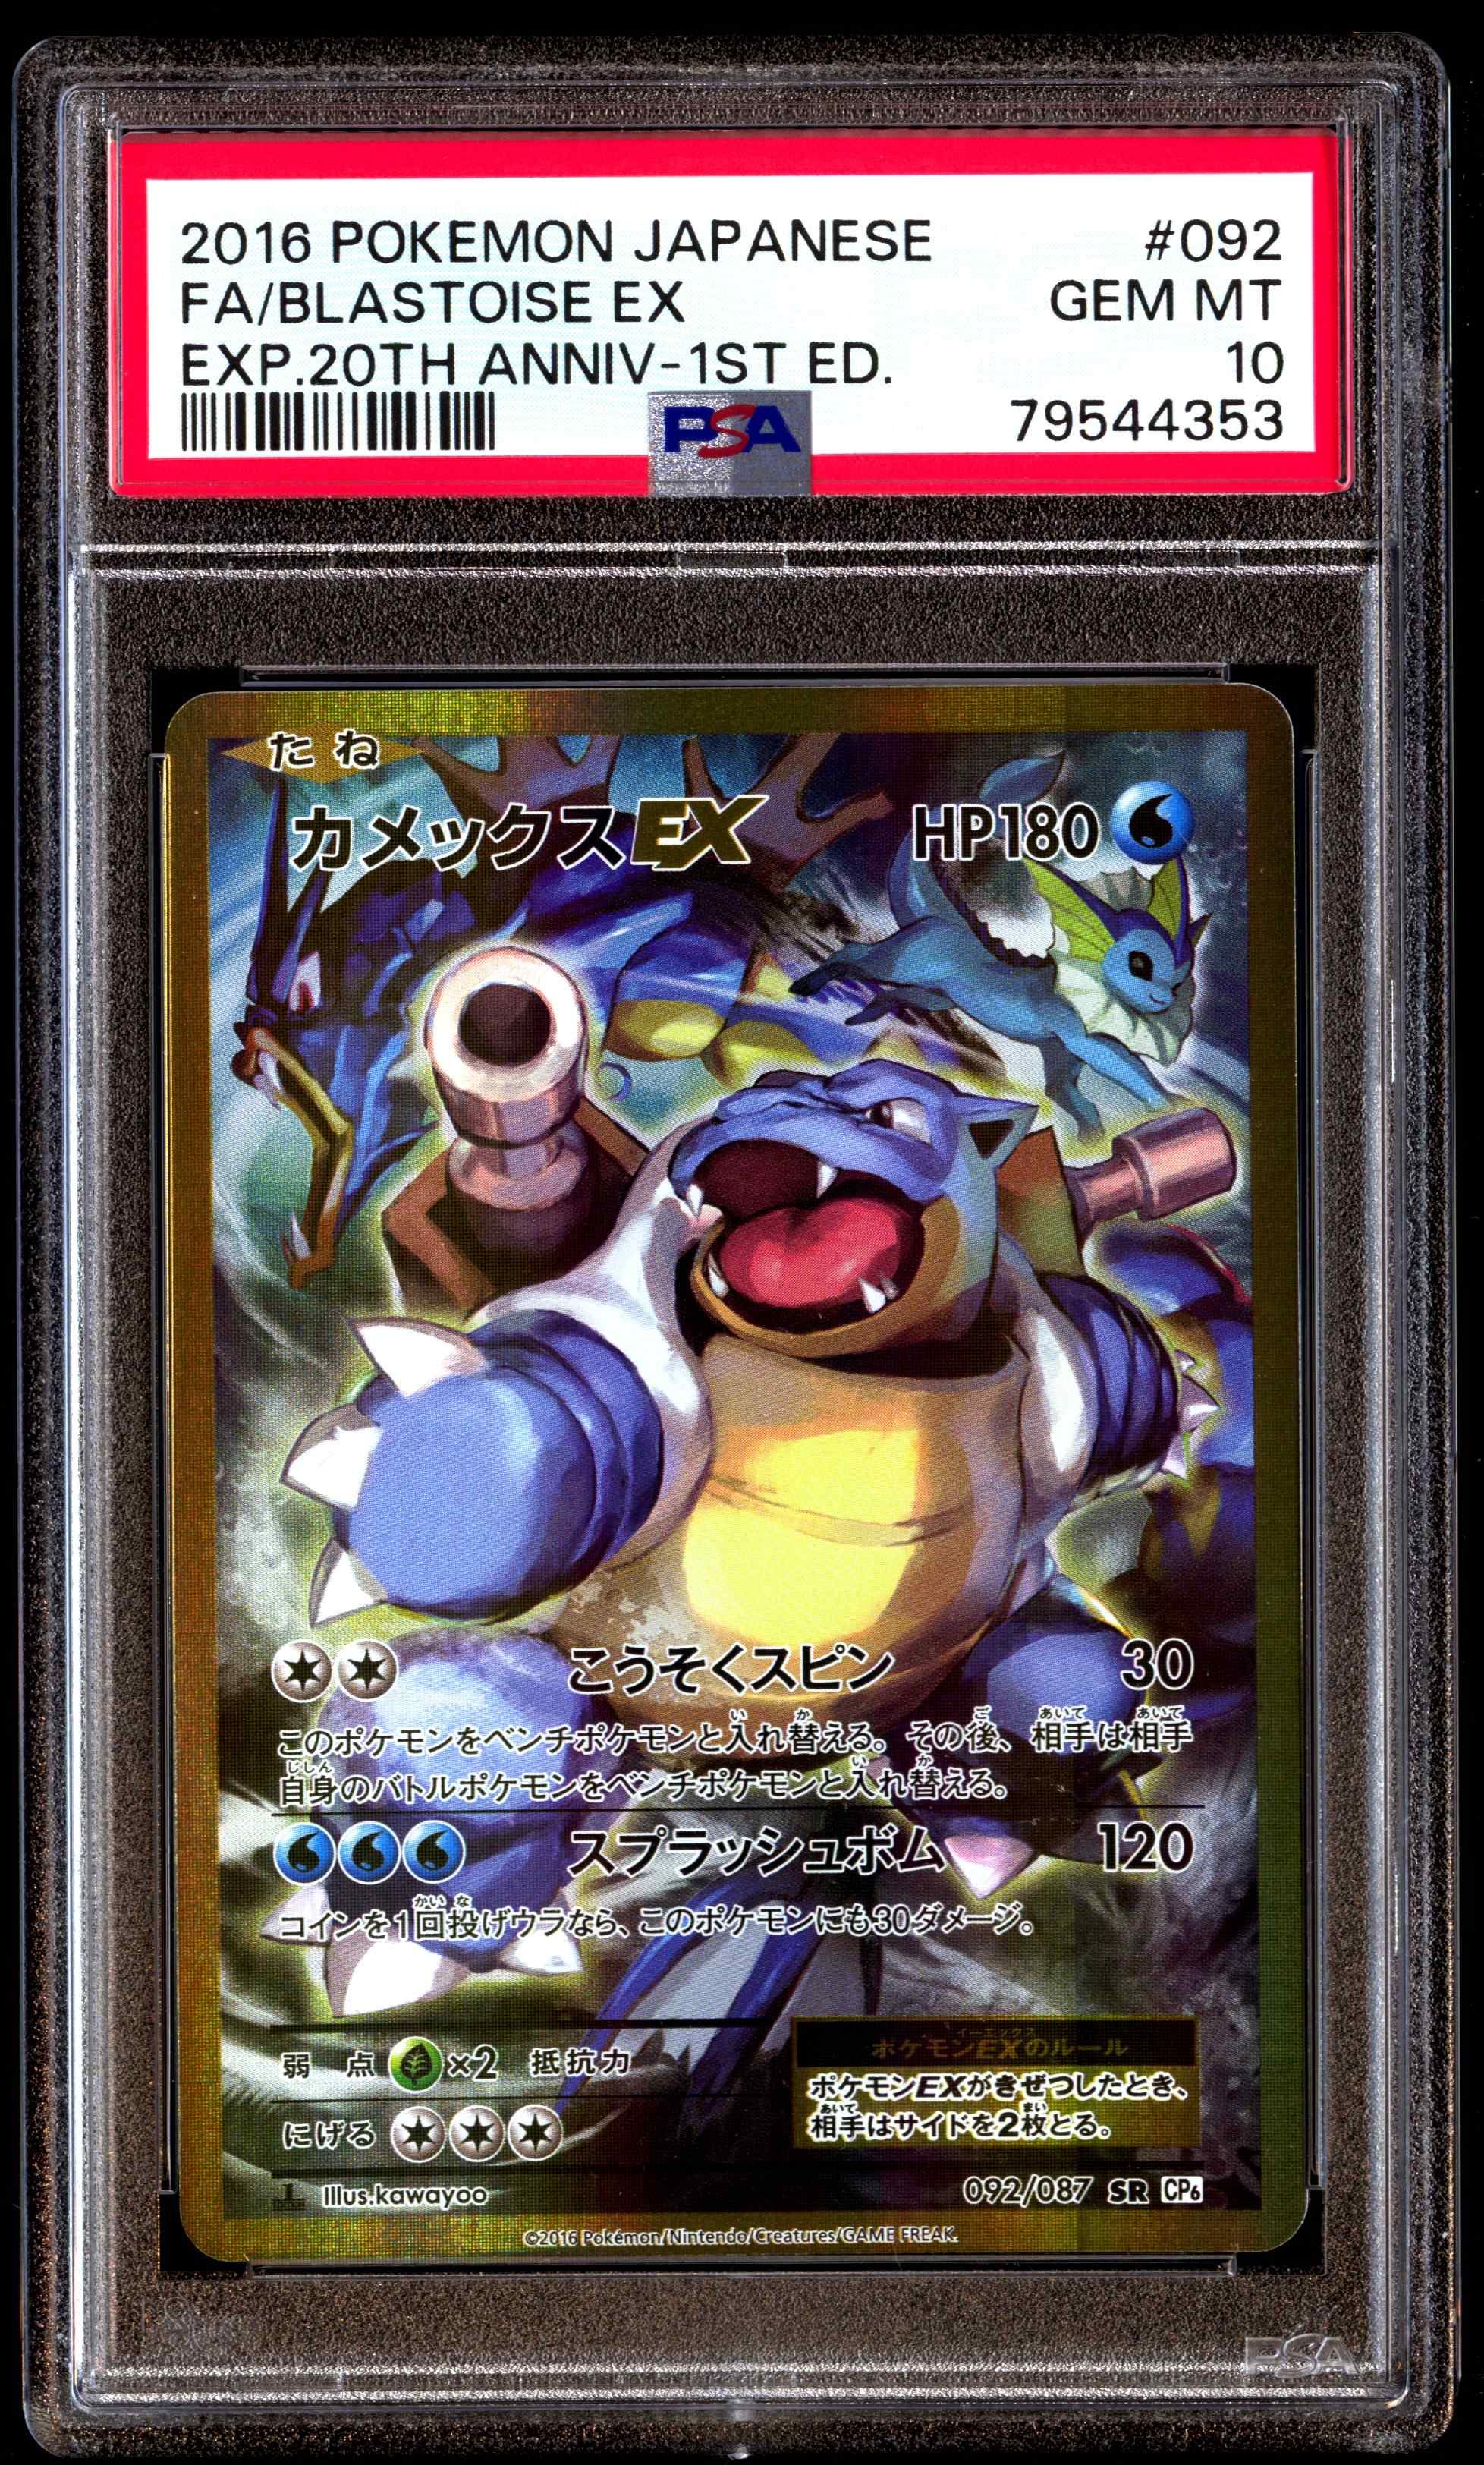 Verified M Gengar-EX - XY Black Star Promos by Pokemon Cards